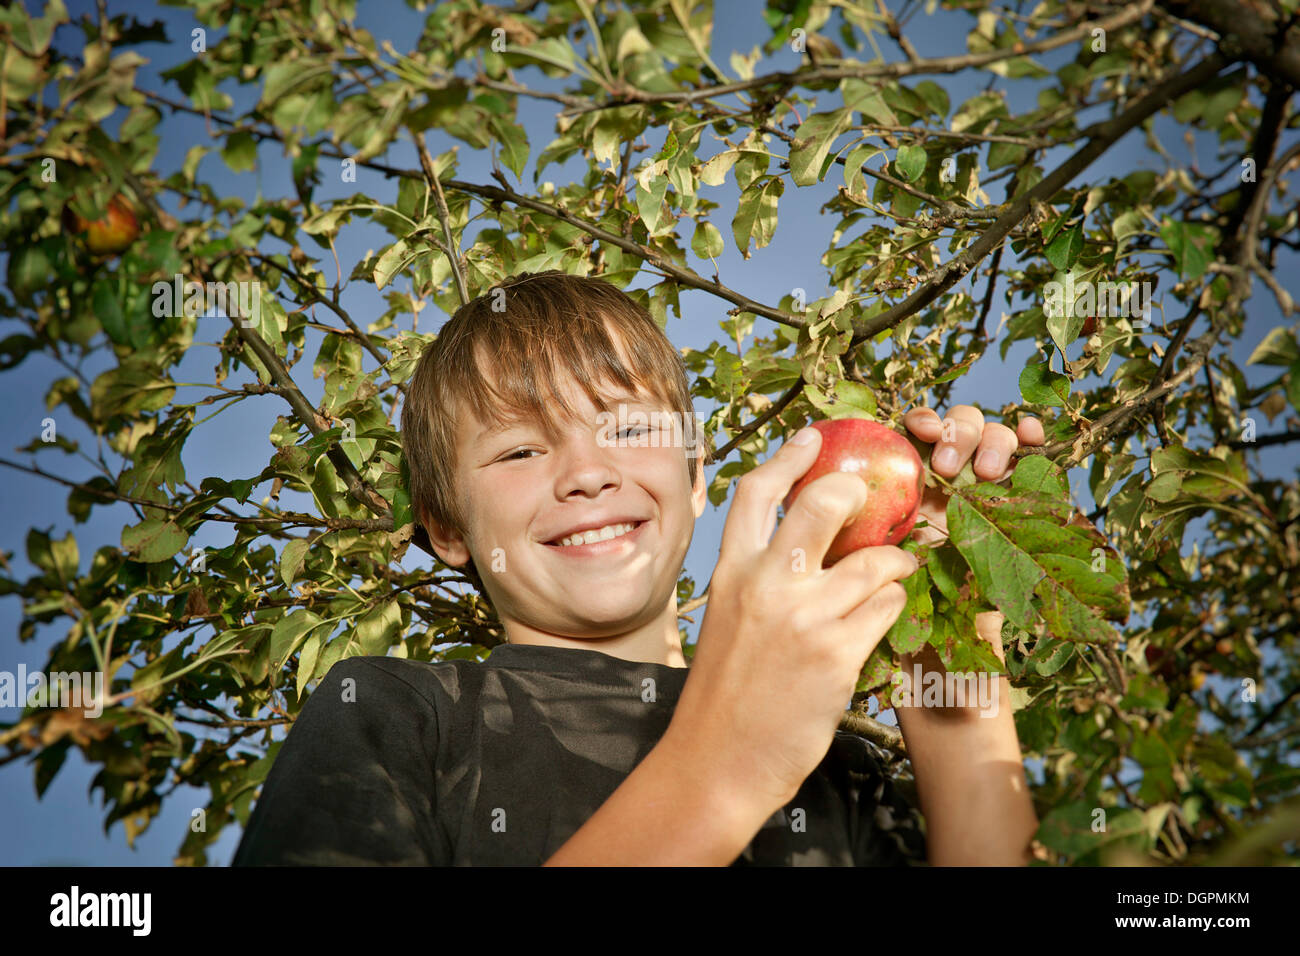 Boy picking apples Stock Photo